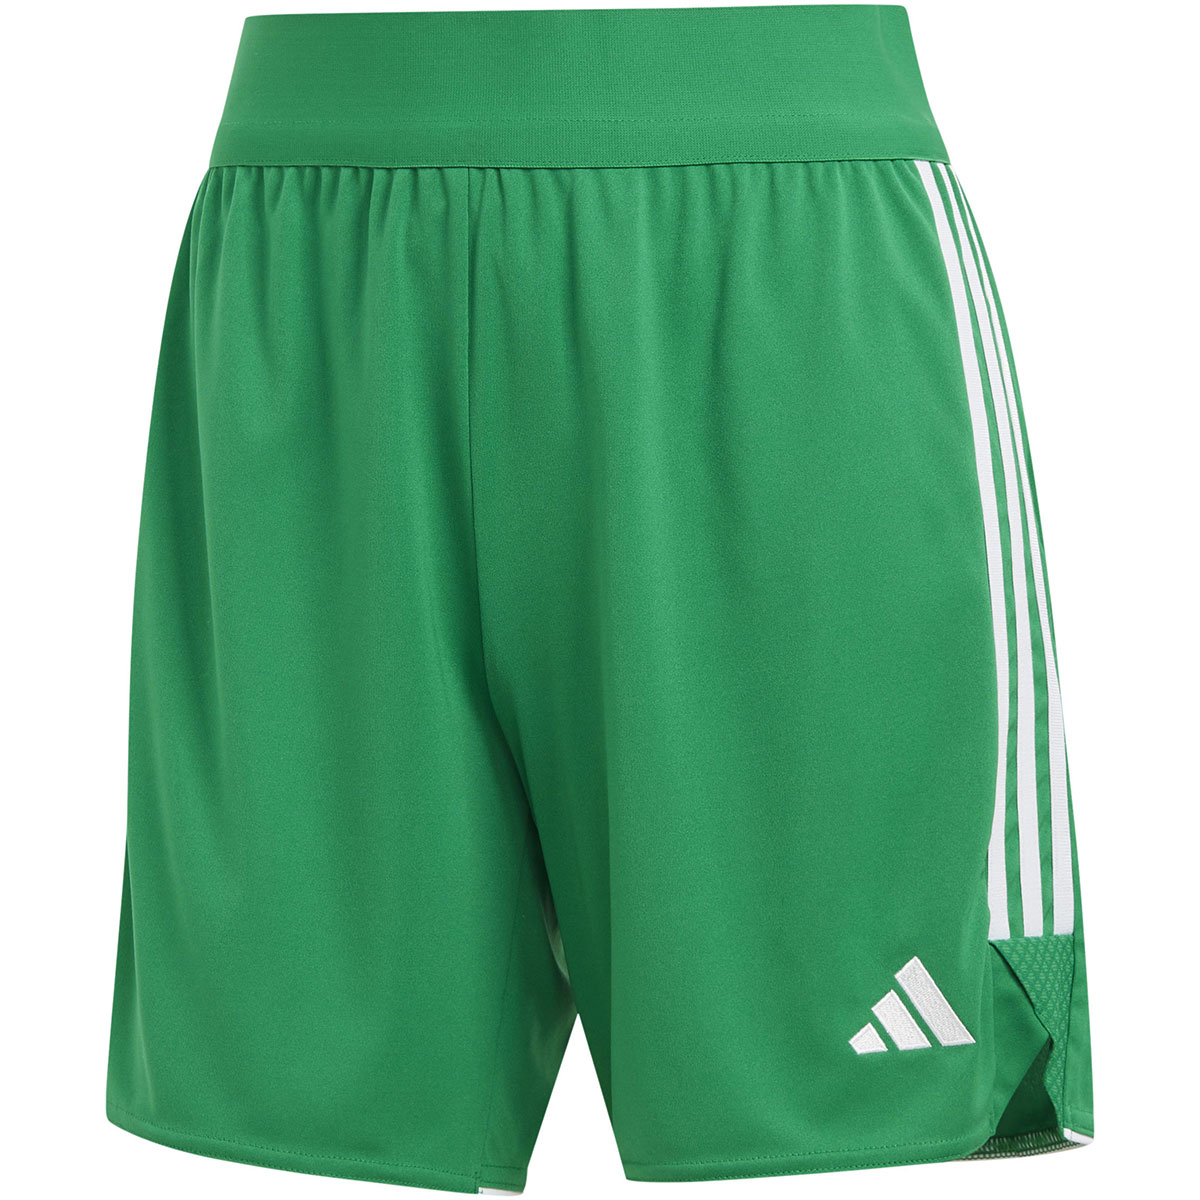 Adidas Damen Shorts Tiro 23 grün-weiß